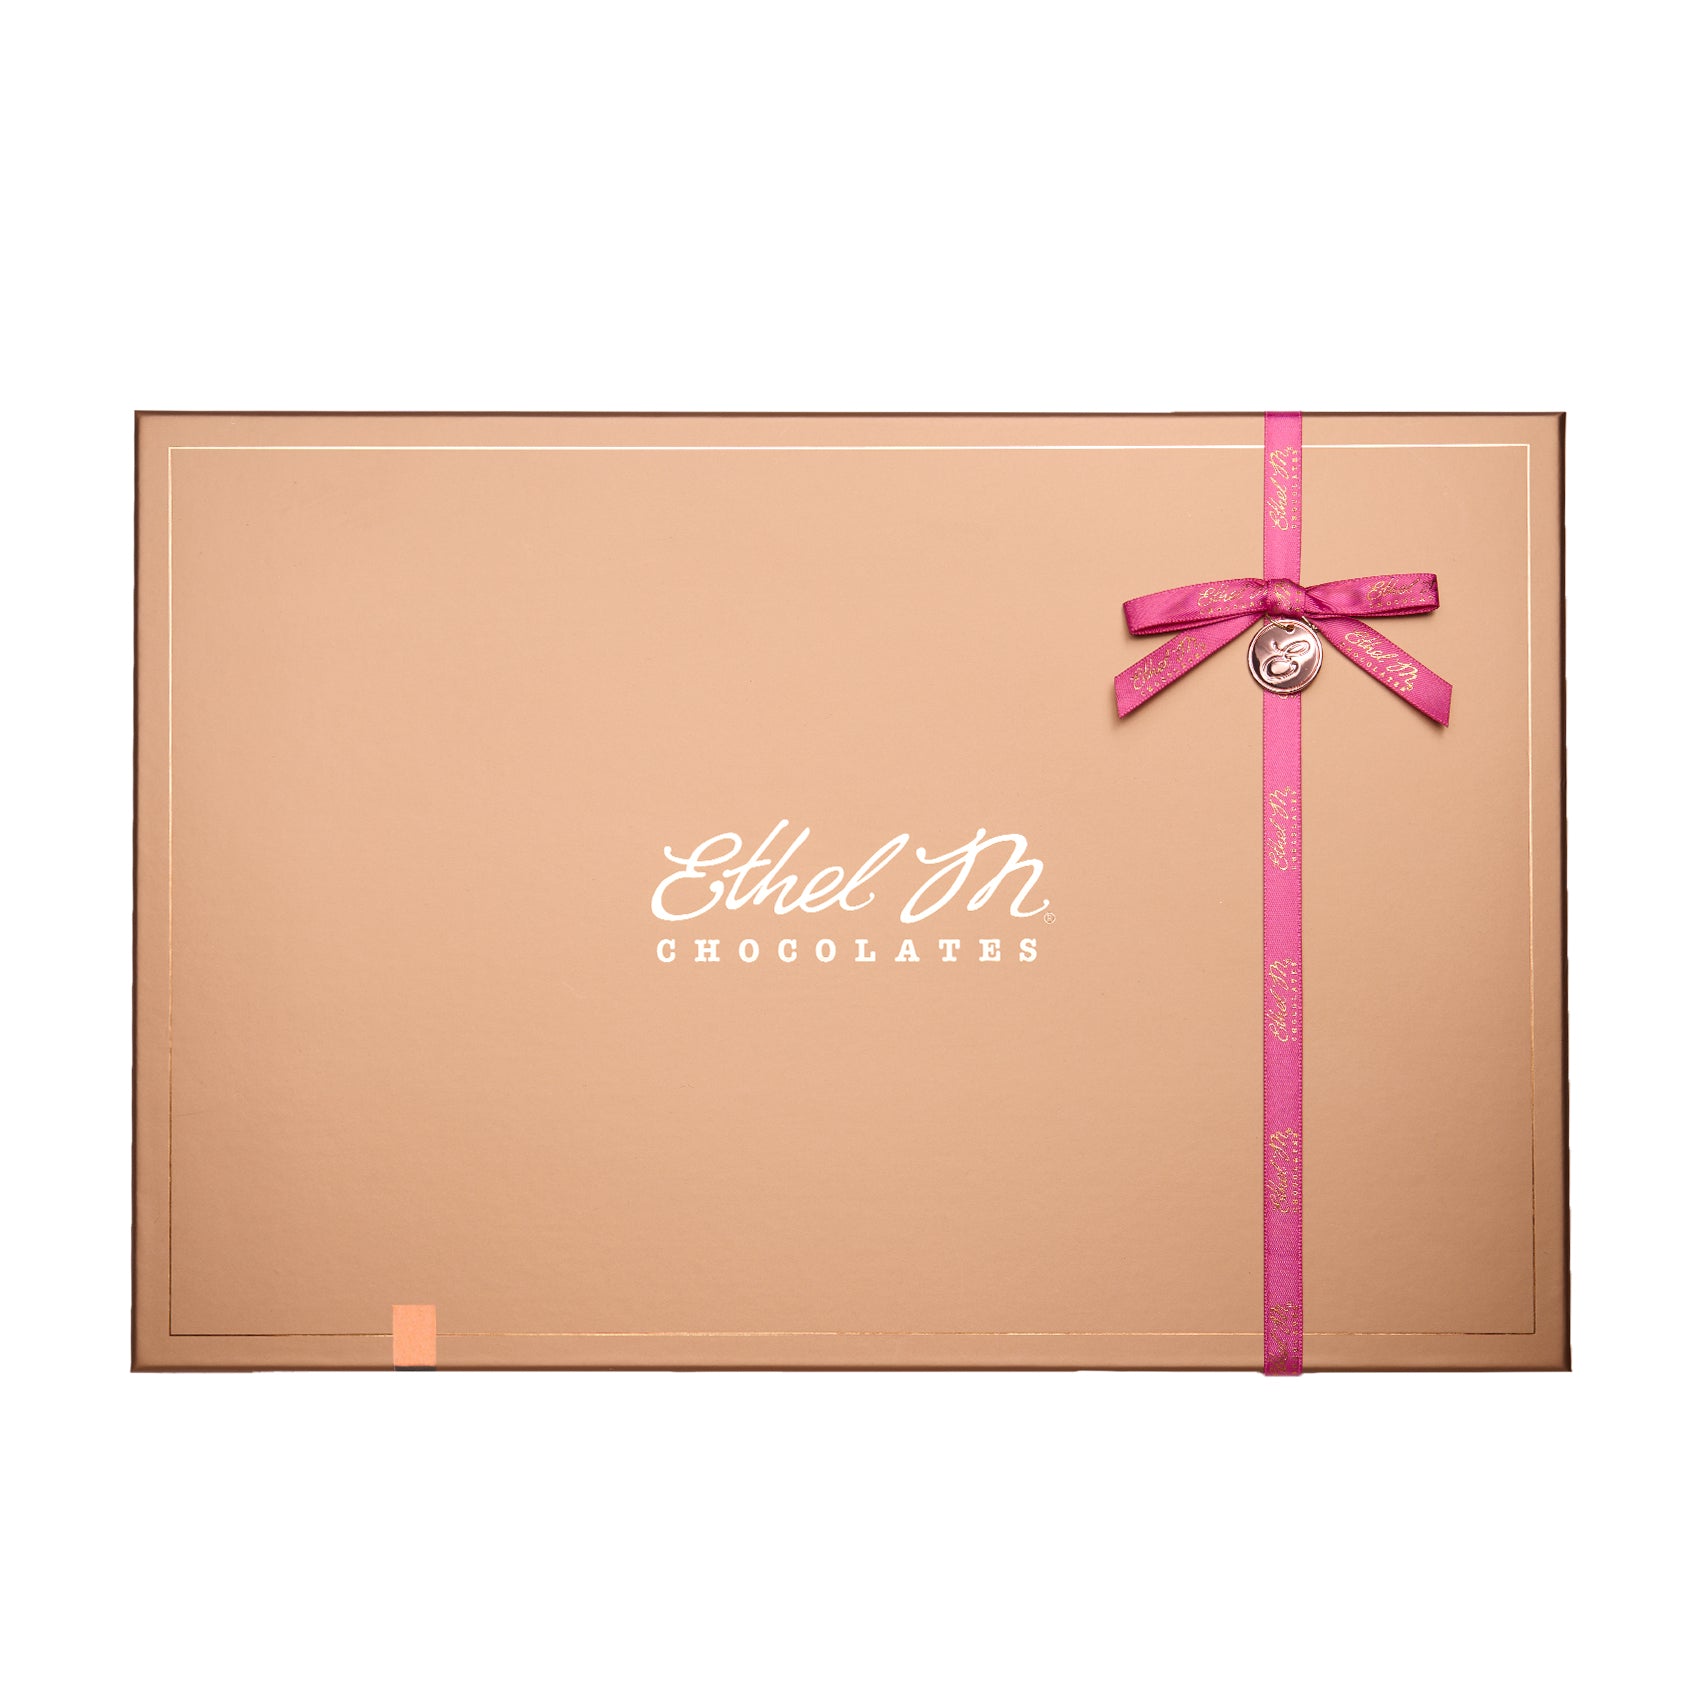 Ethel M Chocolates Custom Chocolate Box - 40-piece Copper Box with Pink Summer Ribbon Hero Image